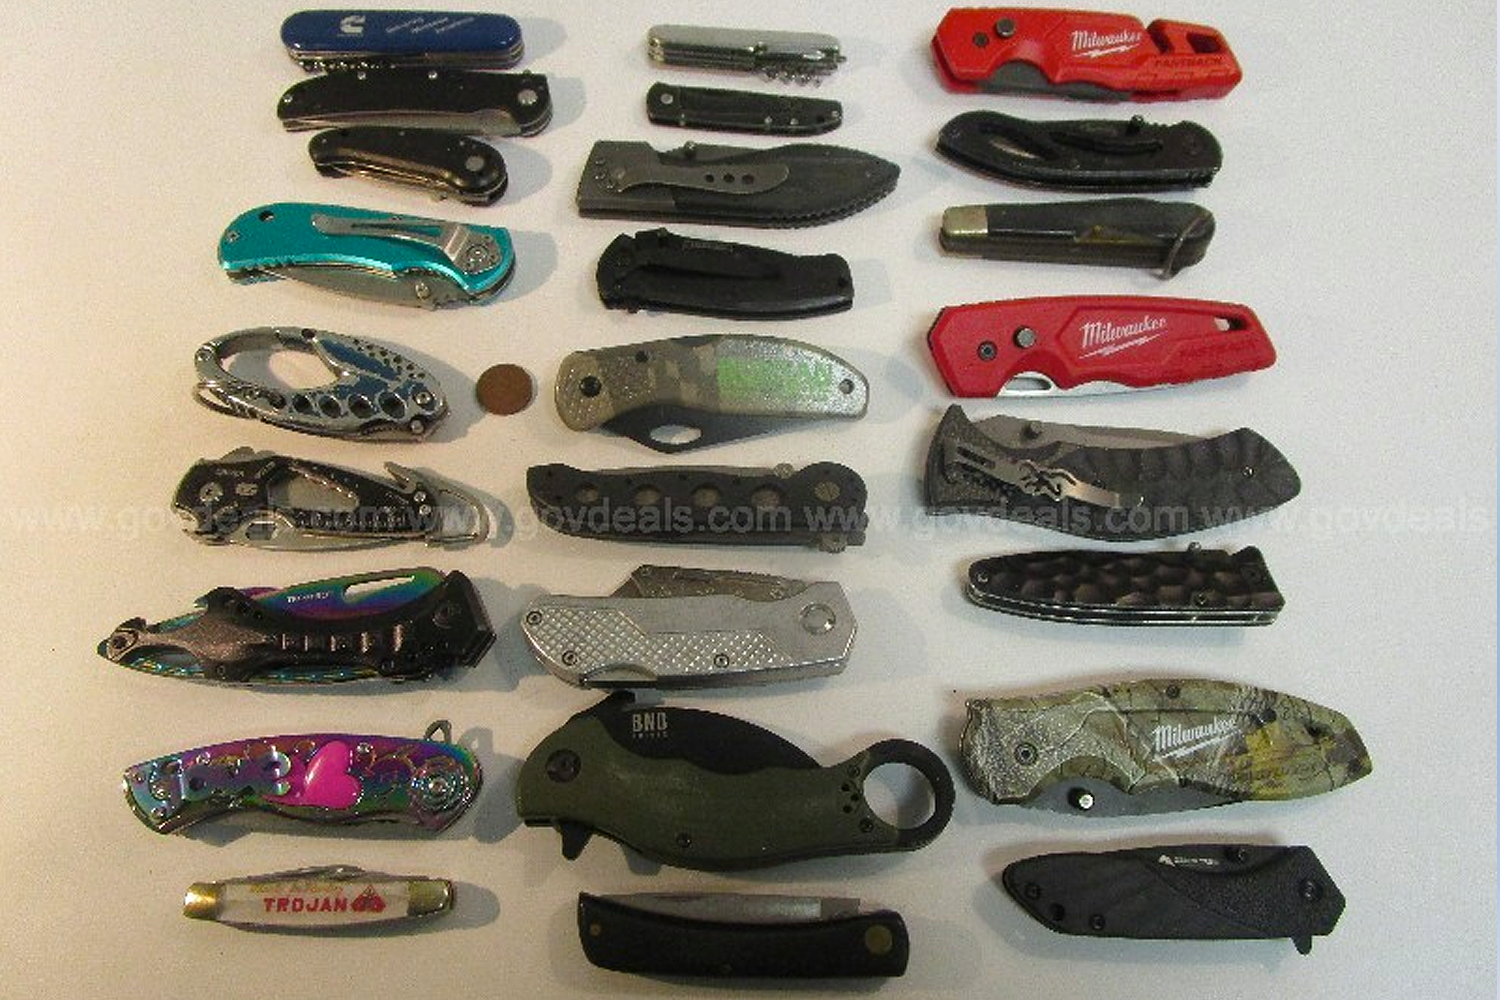 A bundle of 26 knives